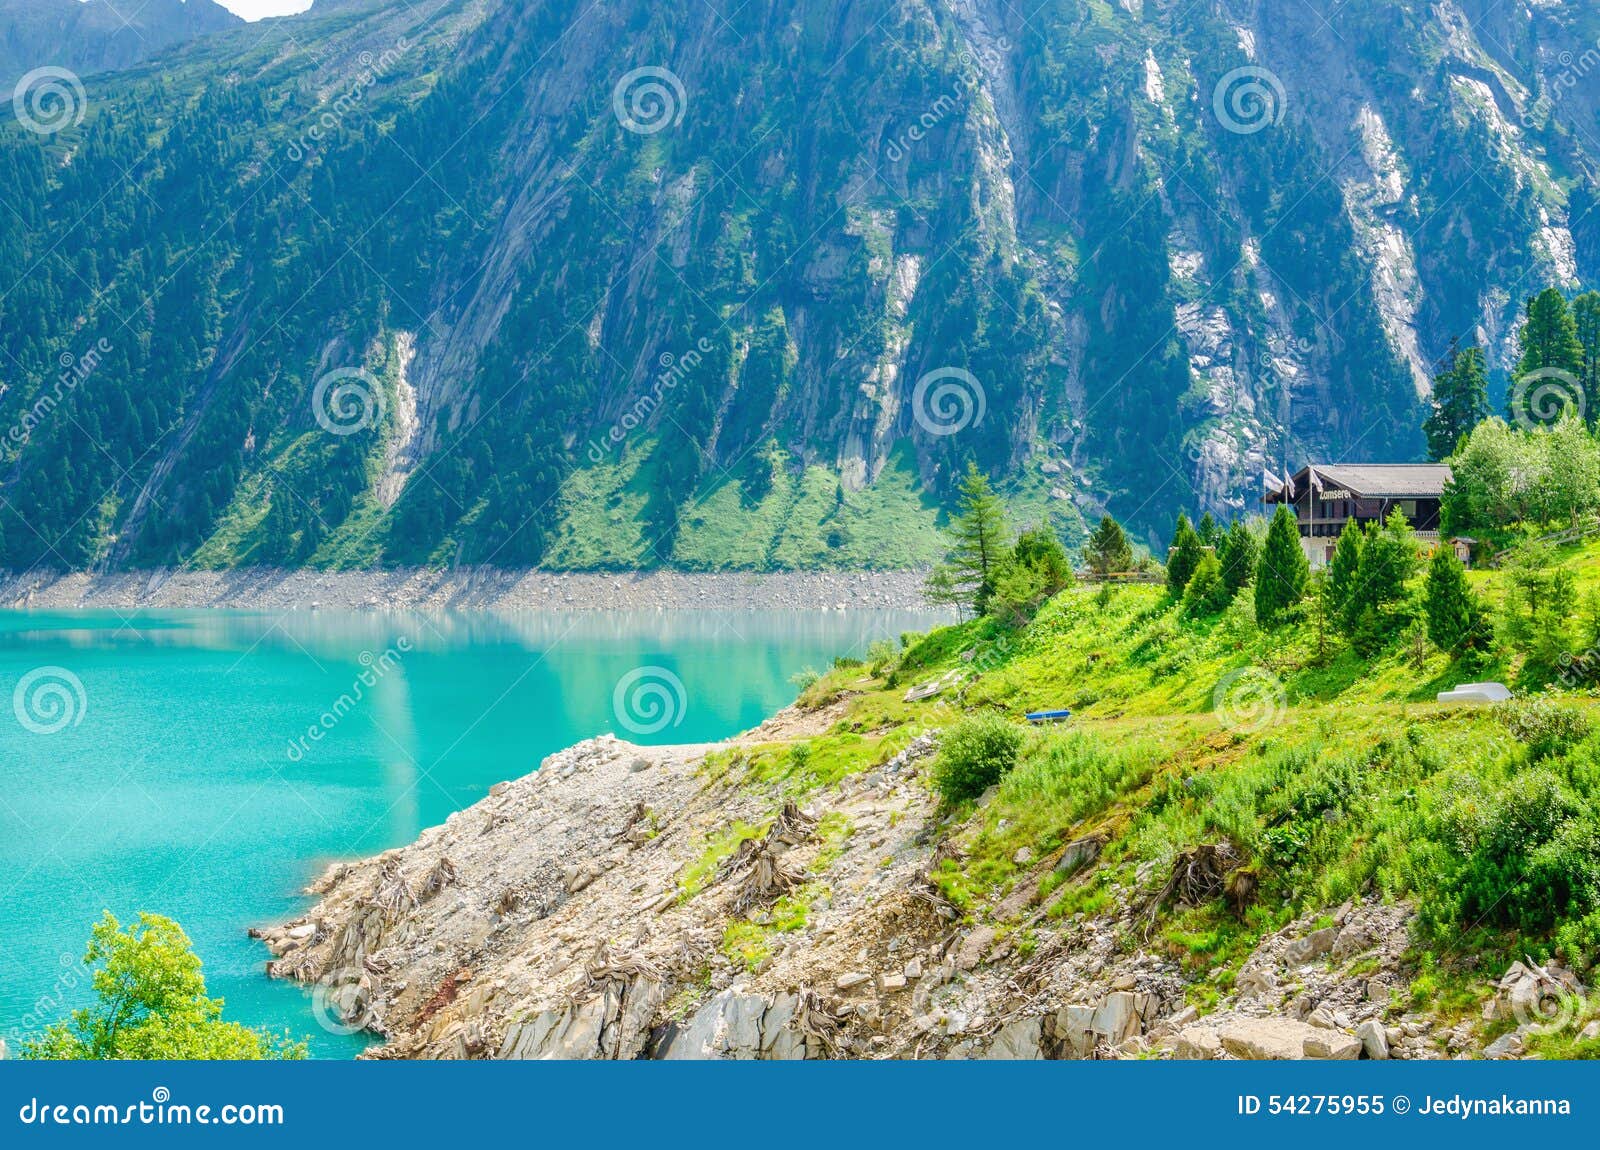 azure lakem wooden hut and peaks of alps, austria